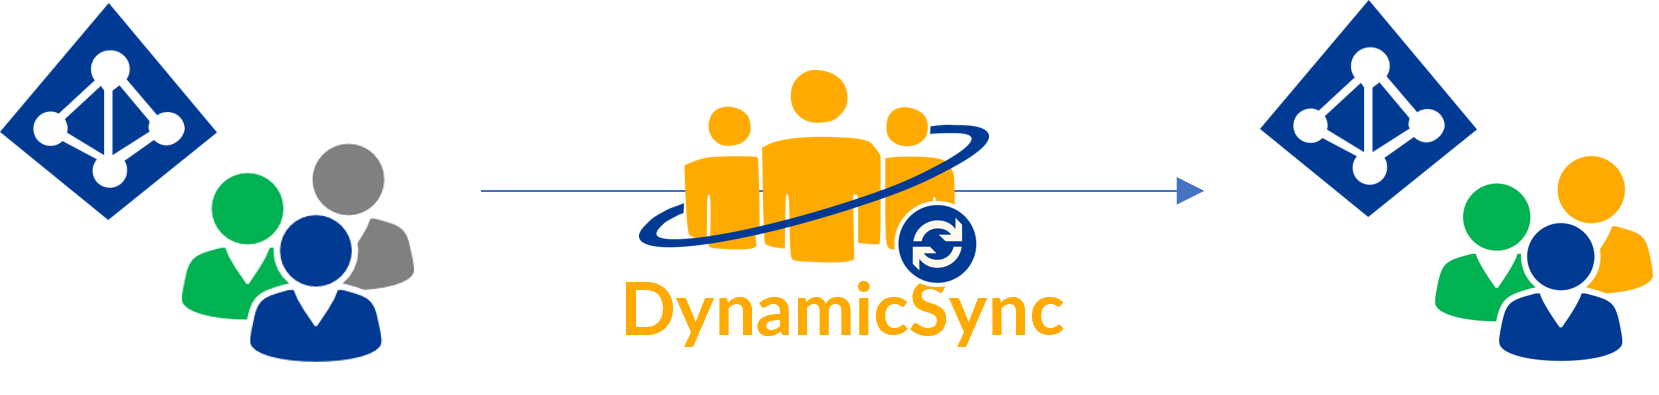 DynamicSync synchronisiert Gruppen in der Cloud